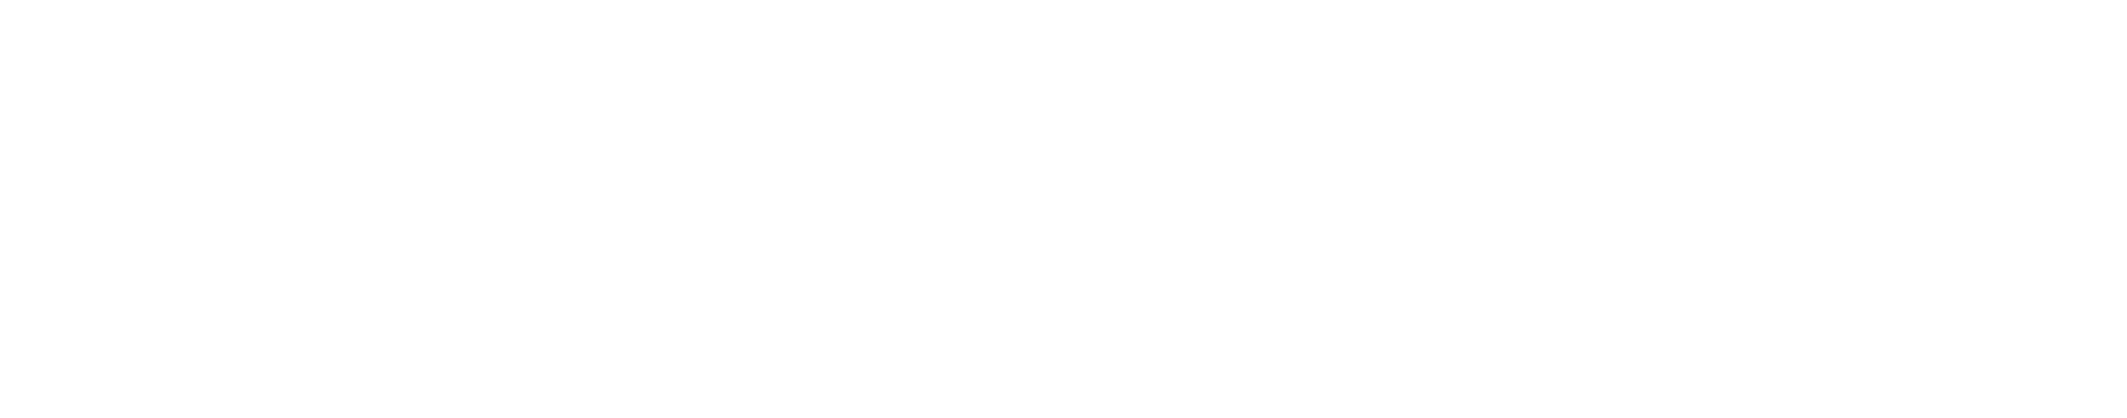 Landon-Undergrad-hrz-FIU-bw-rev